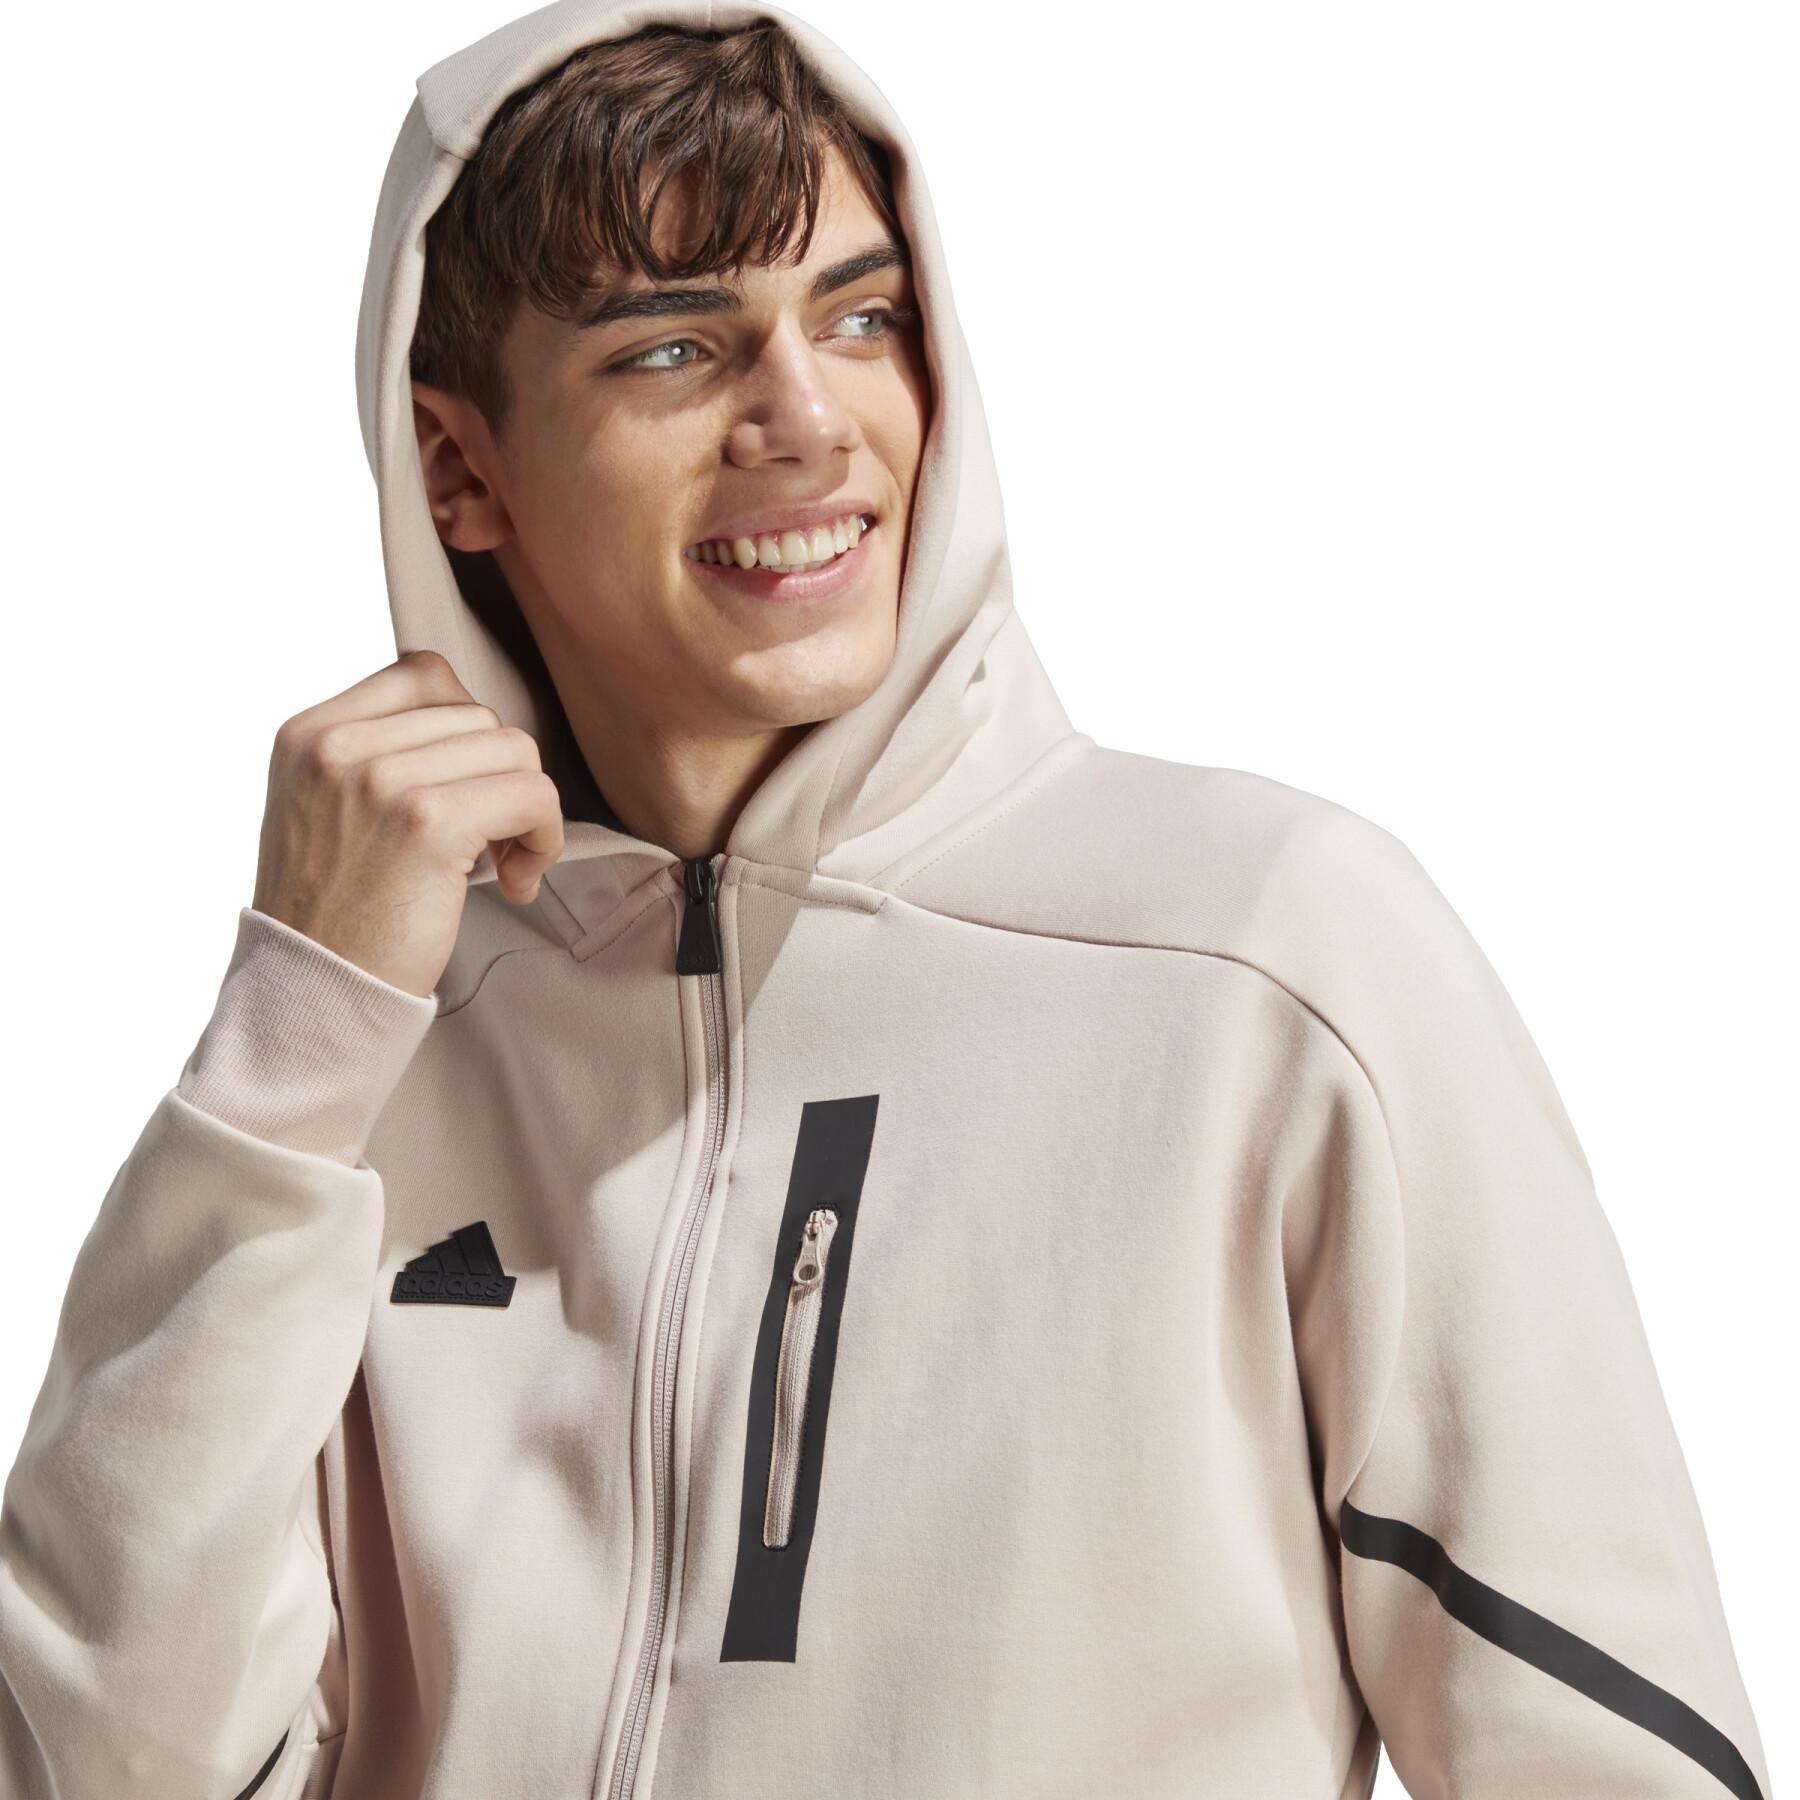 Sweatshirt full-zip hoodie adidas Designed for Gameday